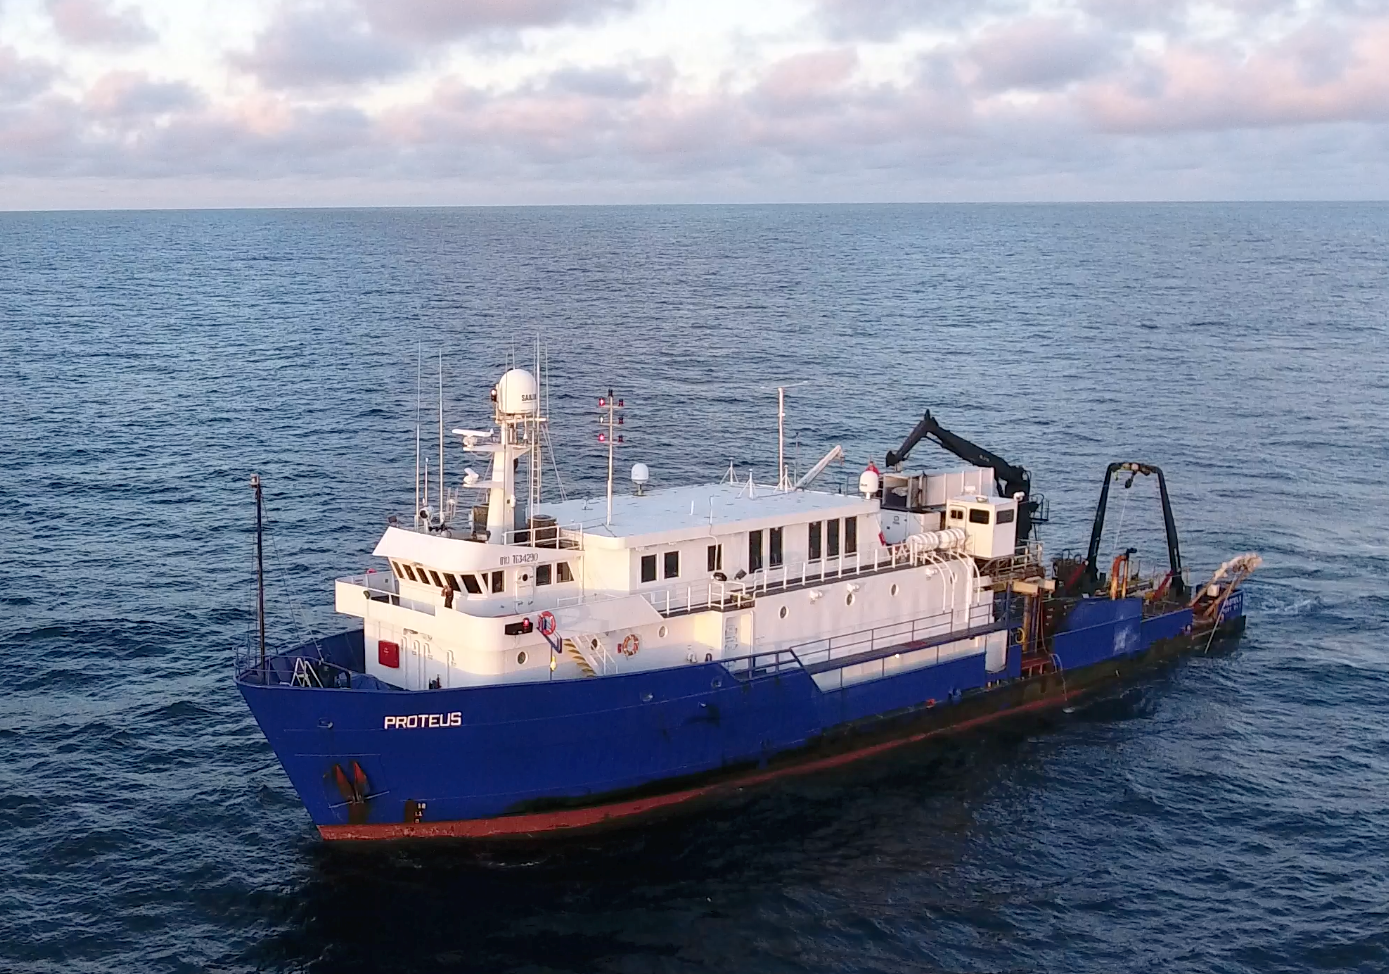 TDI-Brooks vessel R/V Proteus